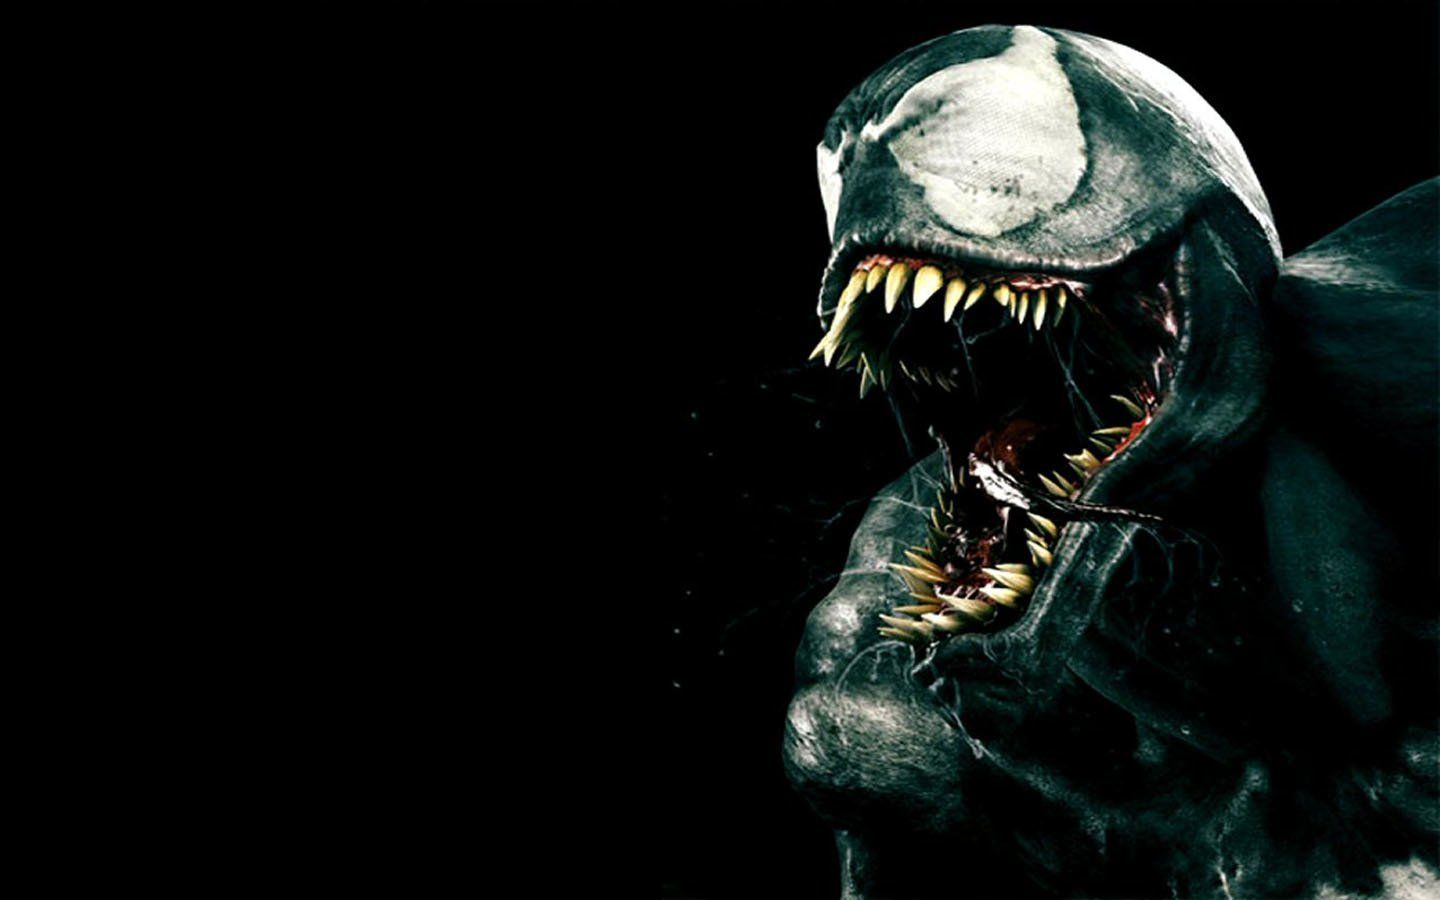 Venom Poster Released Coming